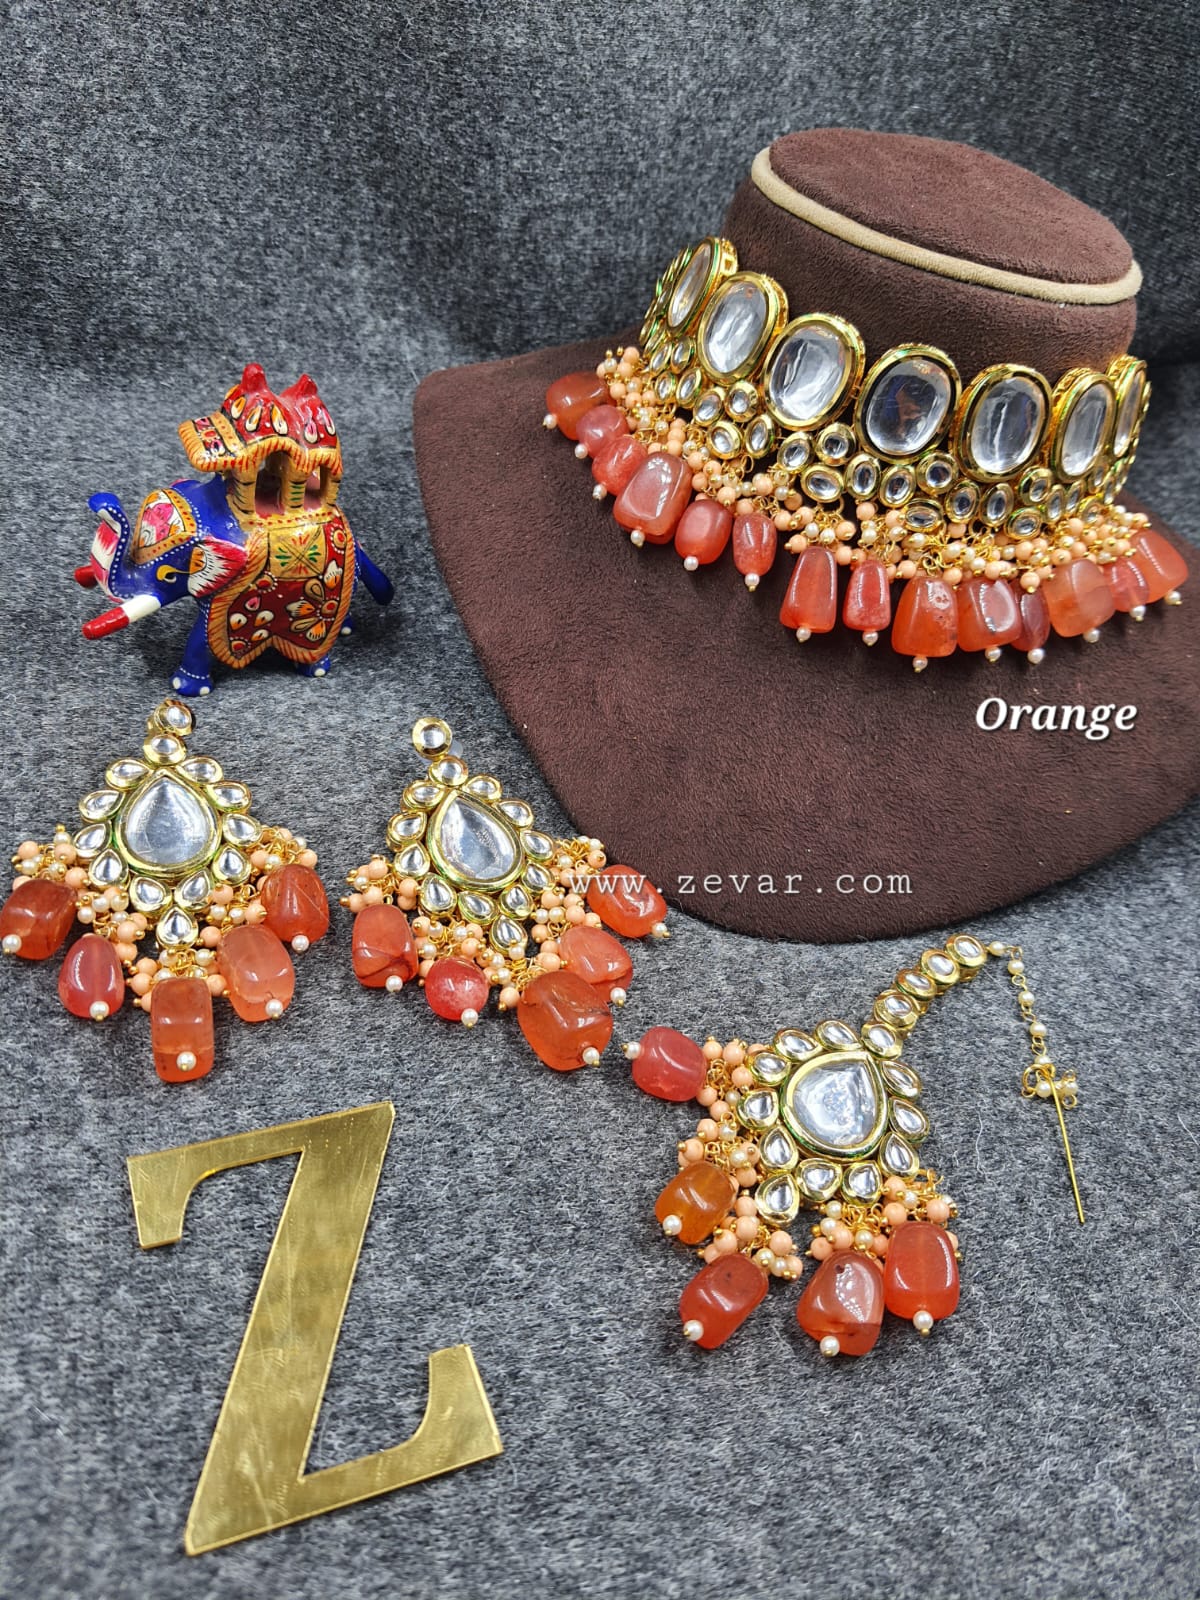 Orange Jewelry: Buy Orange Necklaces, Earrings, Bangles Sets